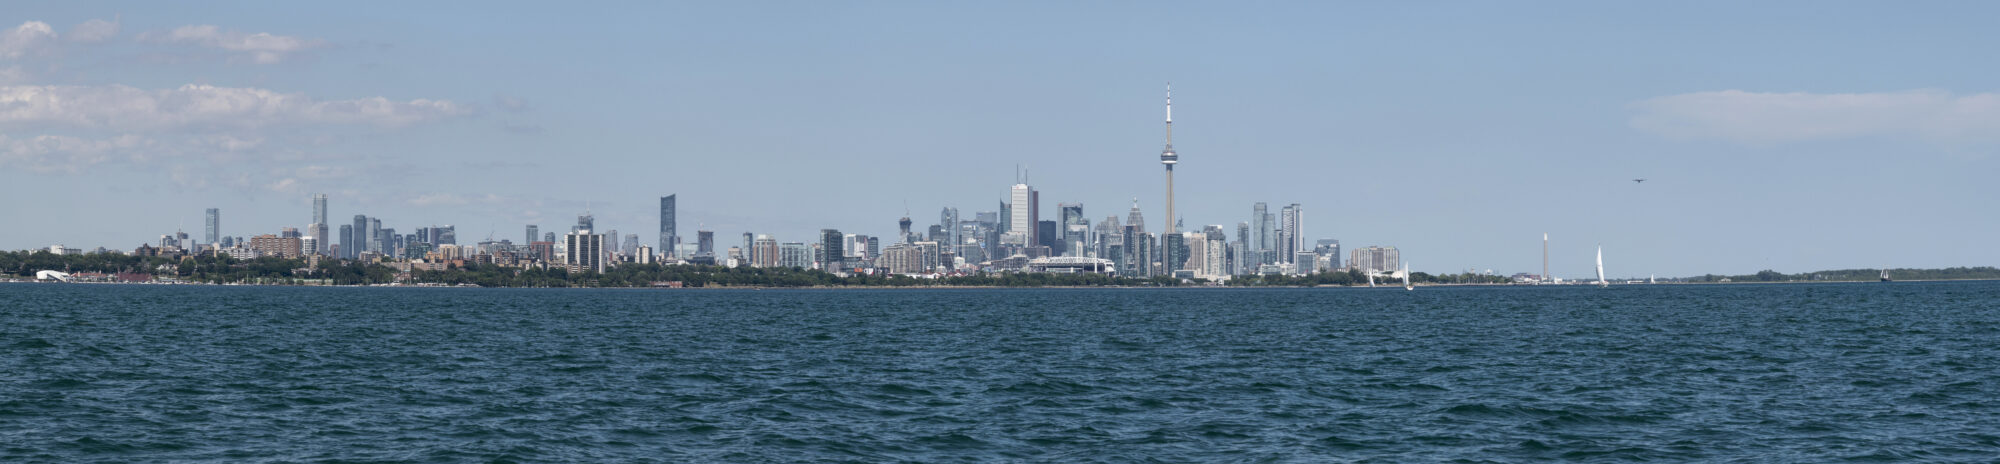 Toronto Harbour Cruise (4)